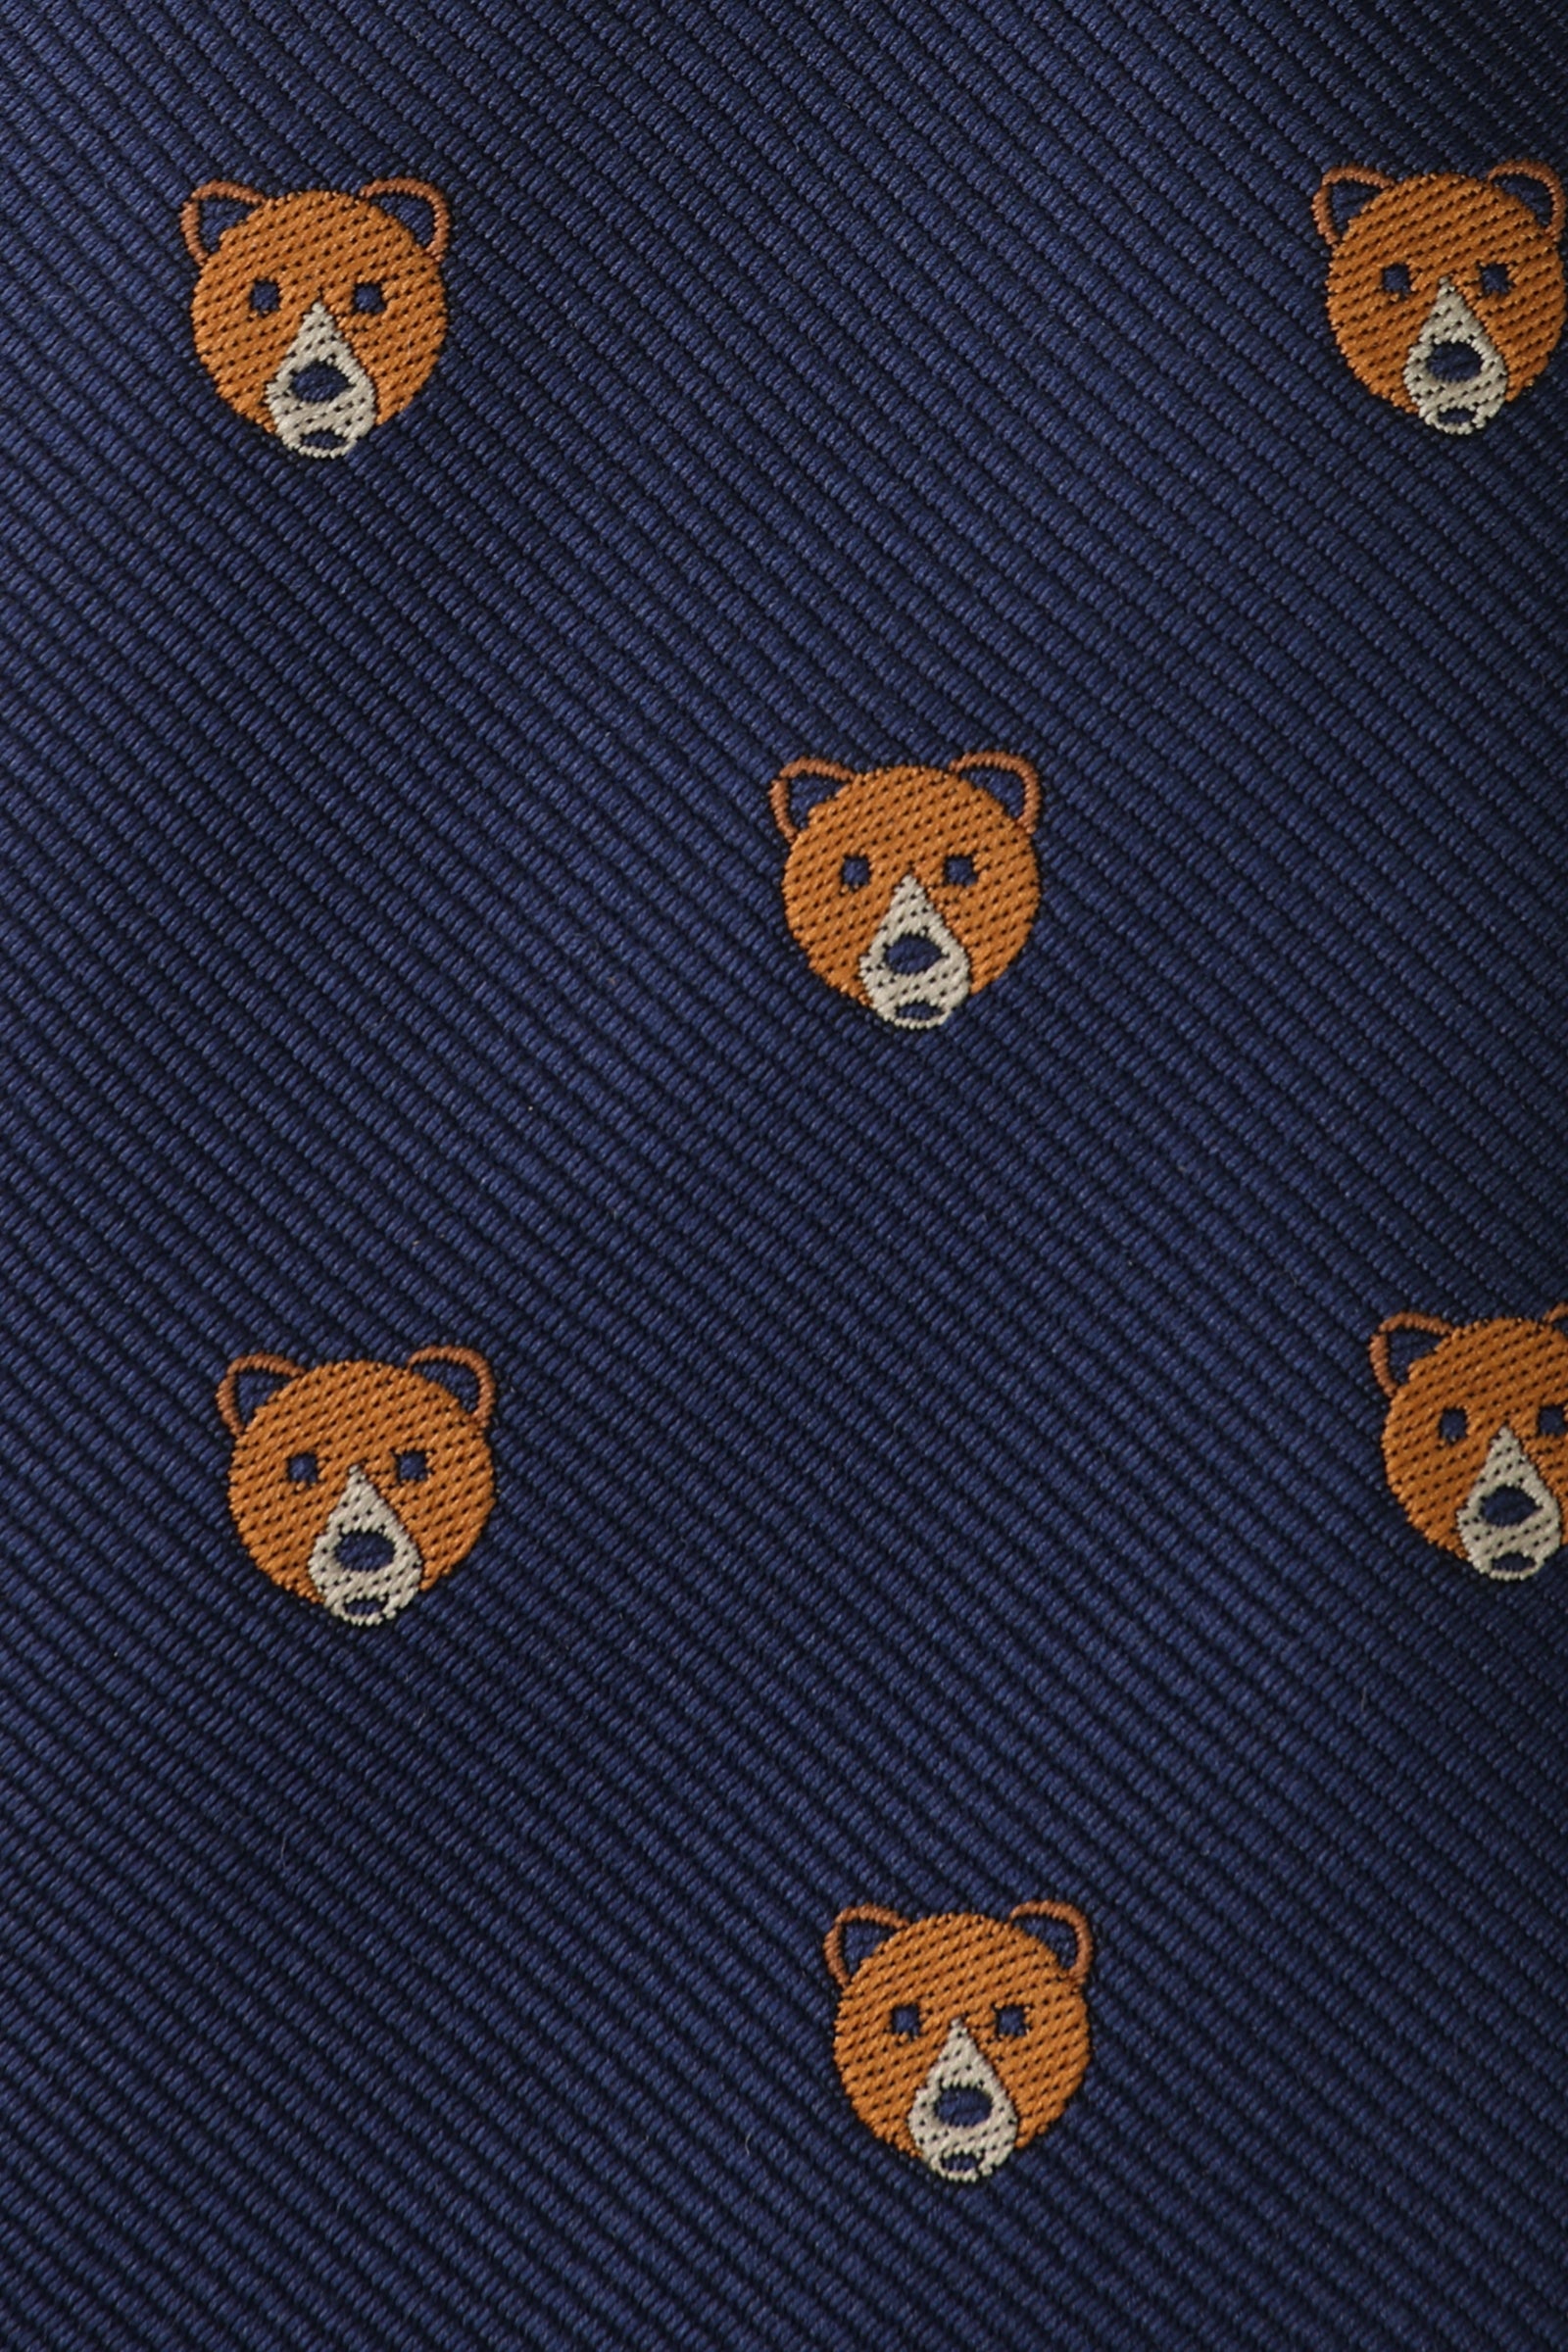 American Brown Bear Kids Necktie Fabric